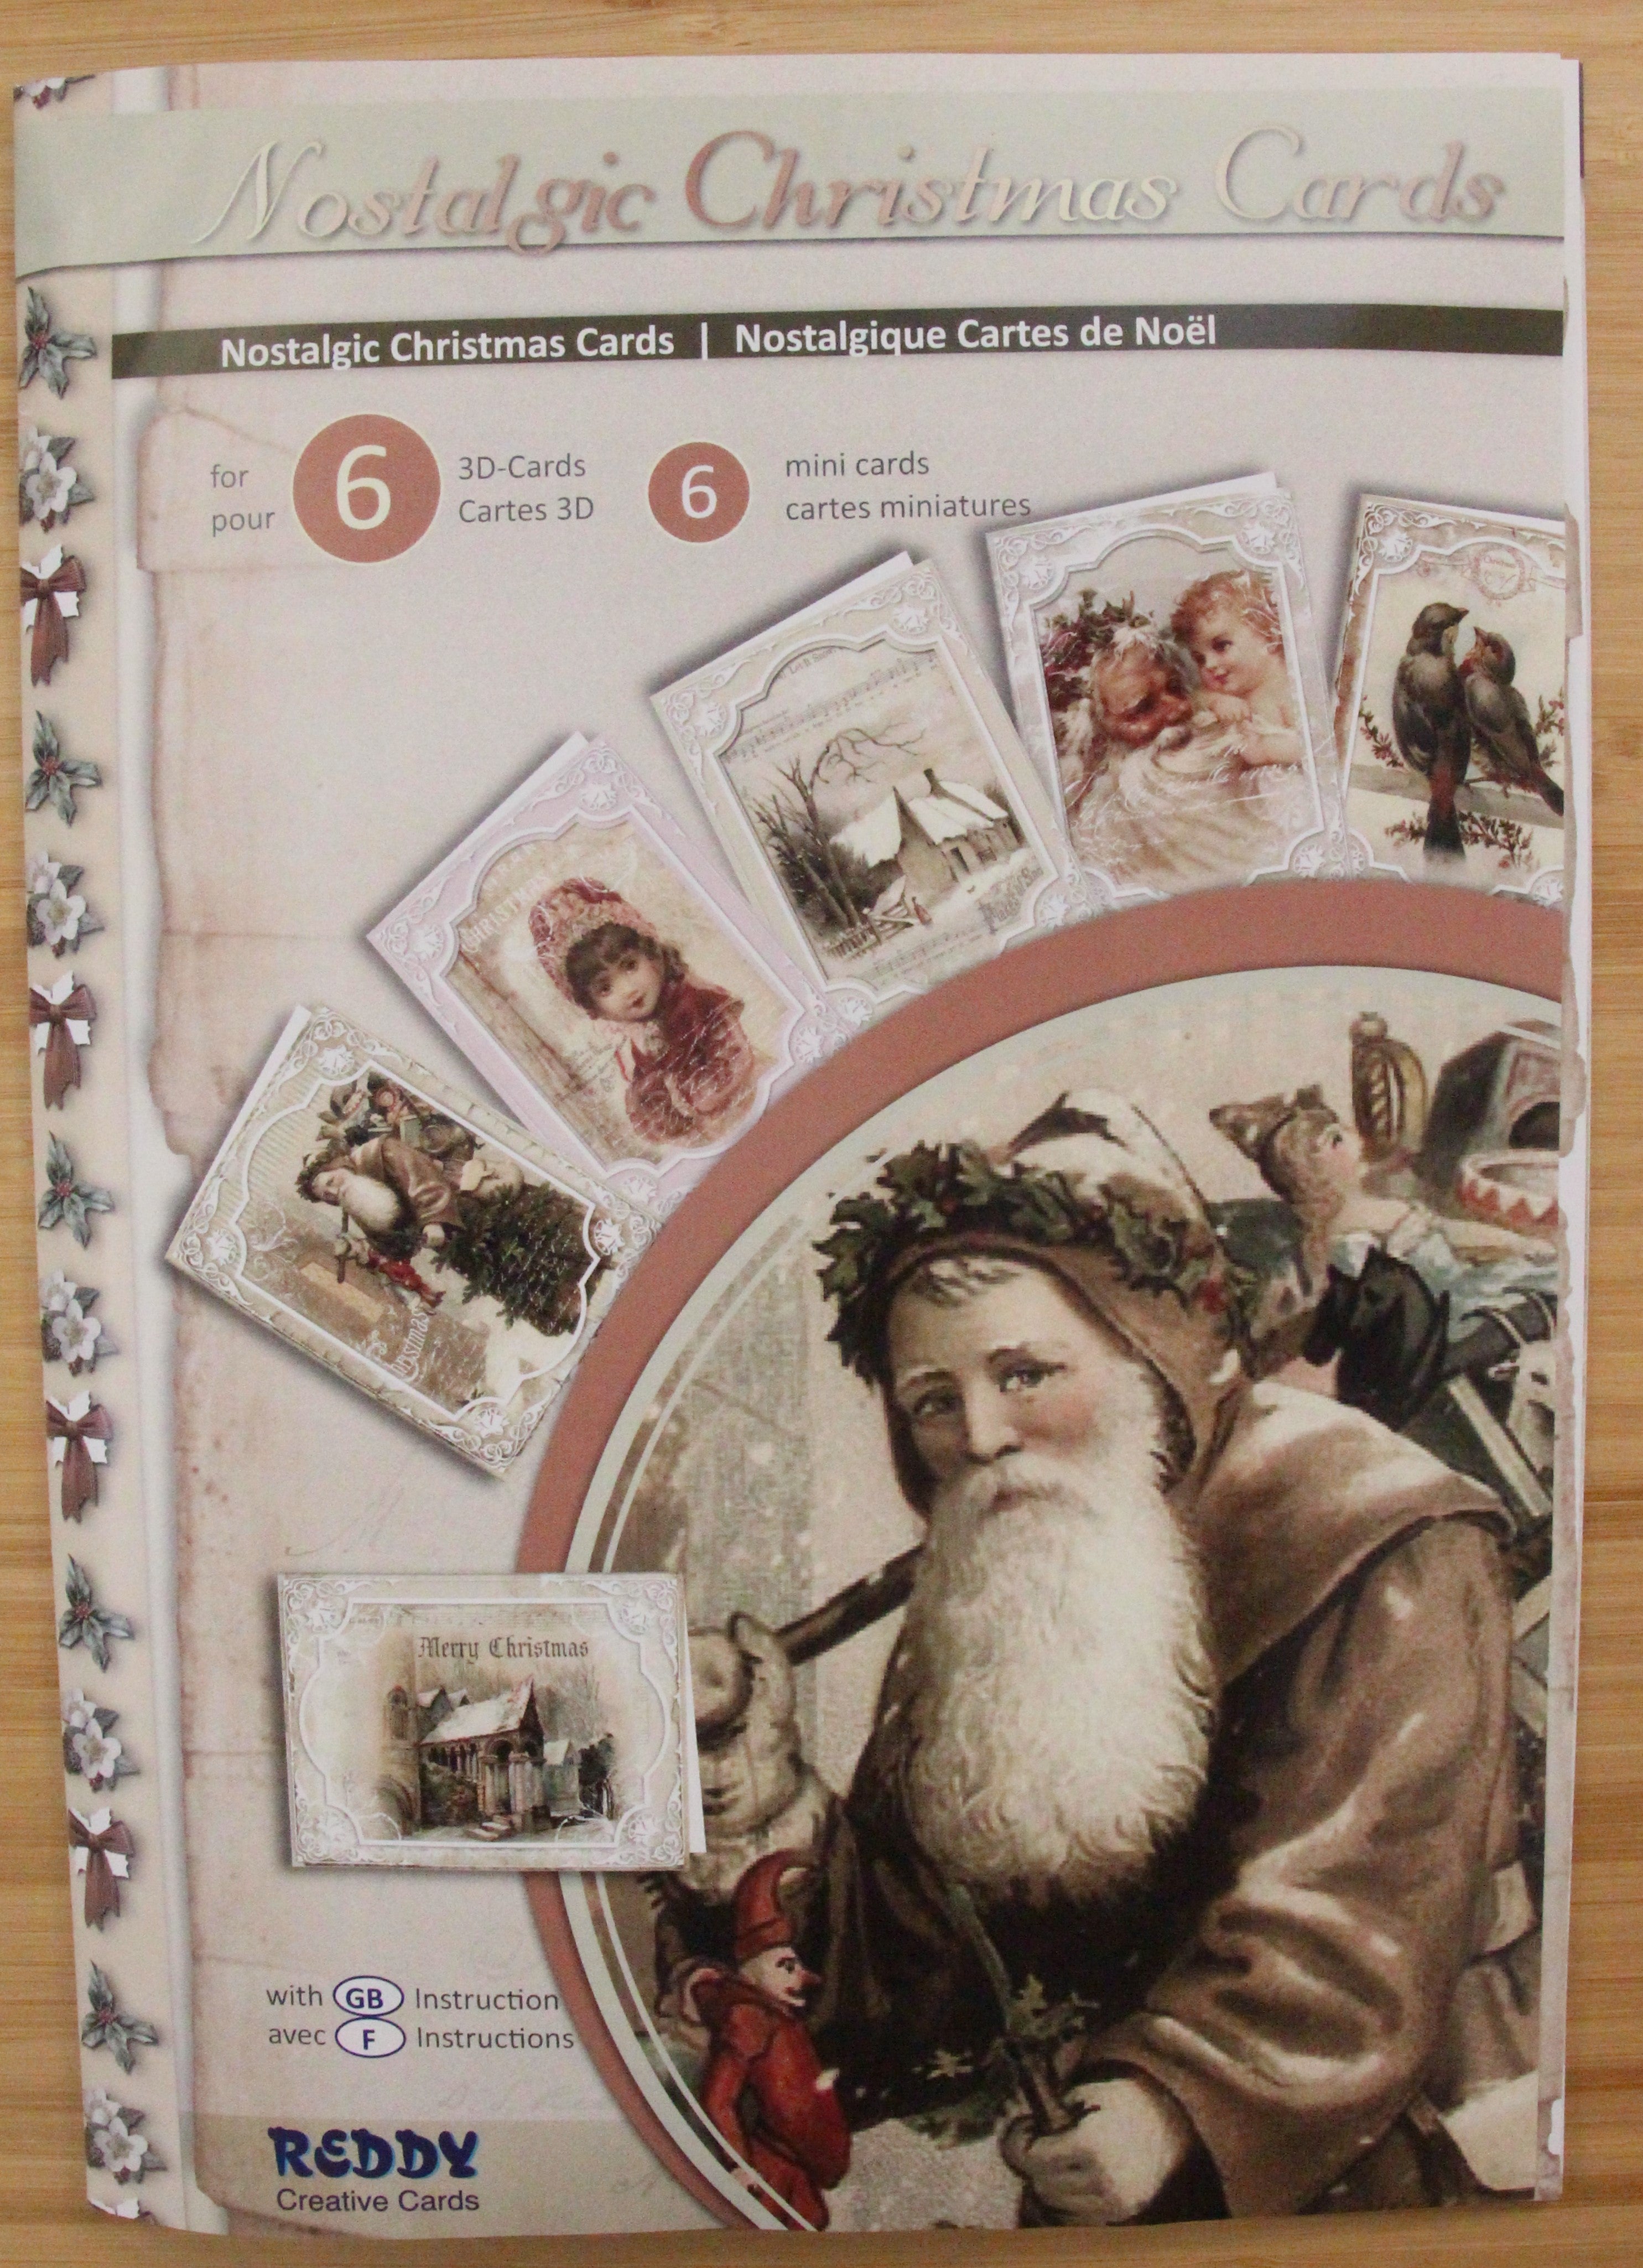 Reddy Cardmaking Books - Nostalgic Christmas